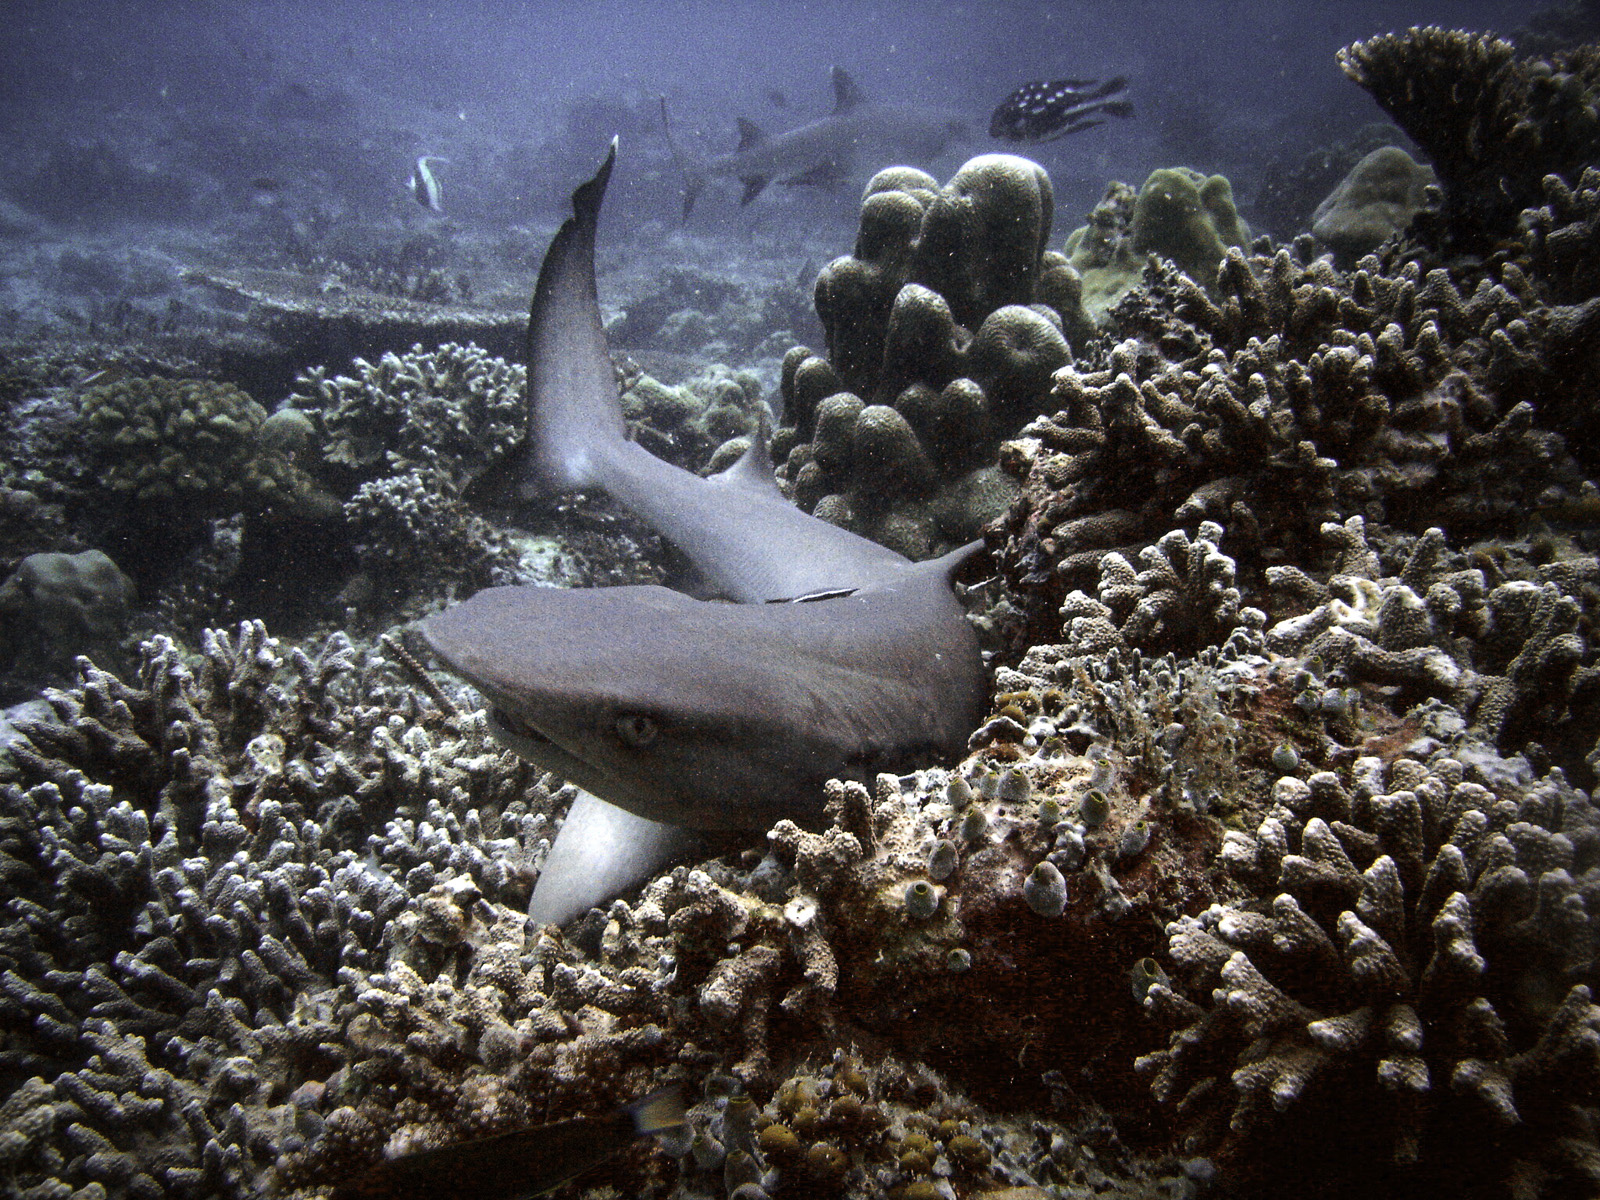 white-tip-reef-shark-triaenodon-obesus-on-the-shallow-reef-sipadan-island-tino-hermannn.jpg